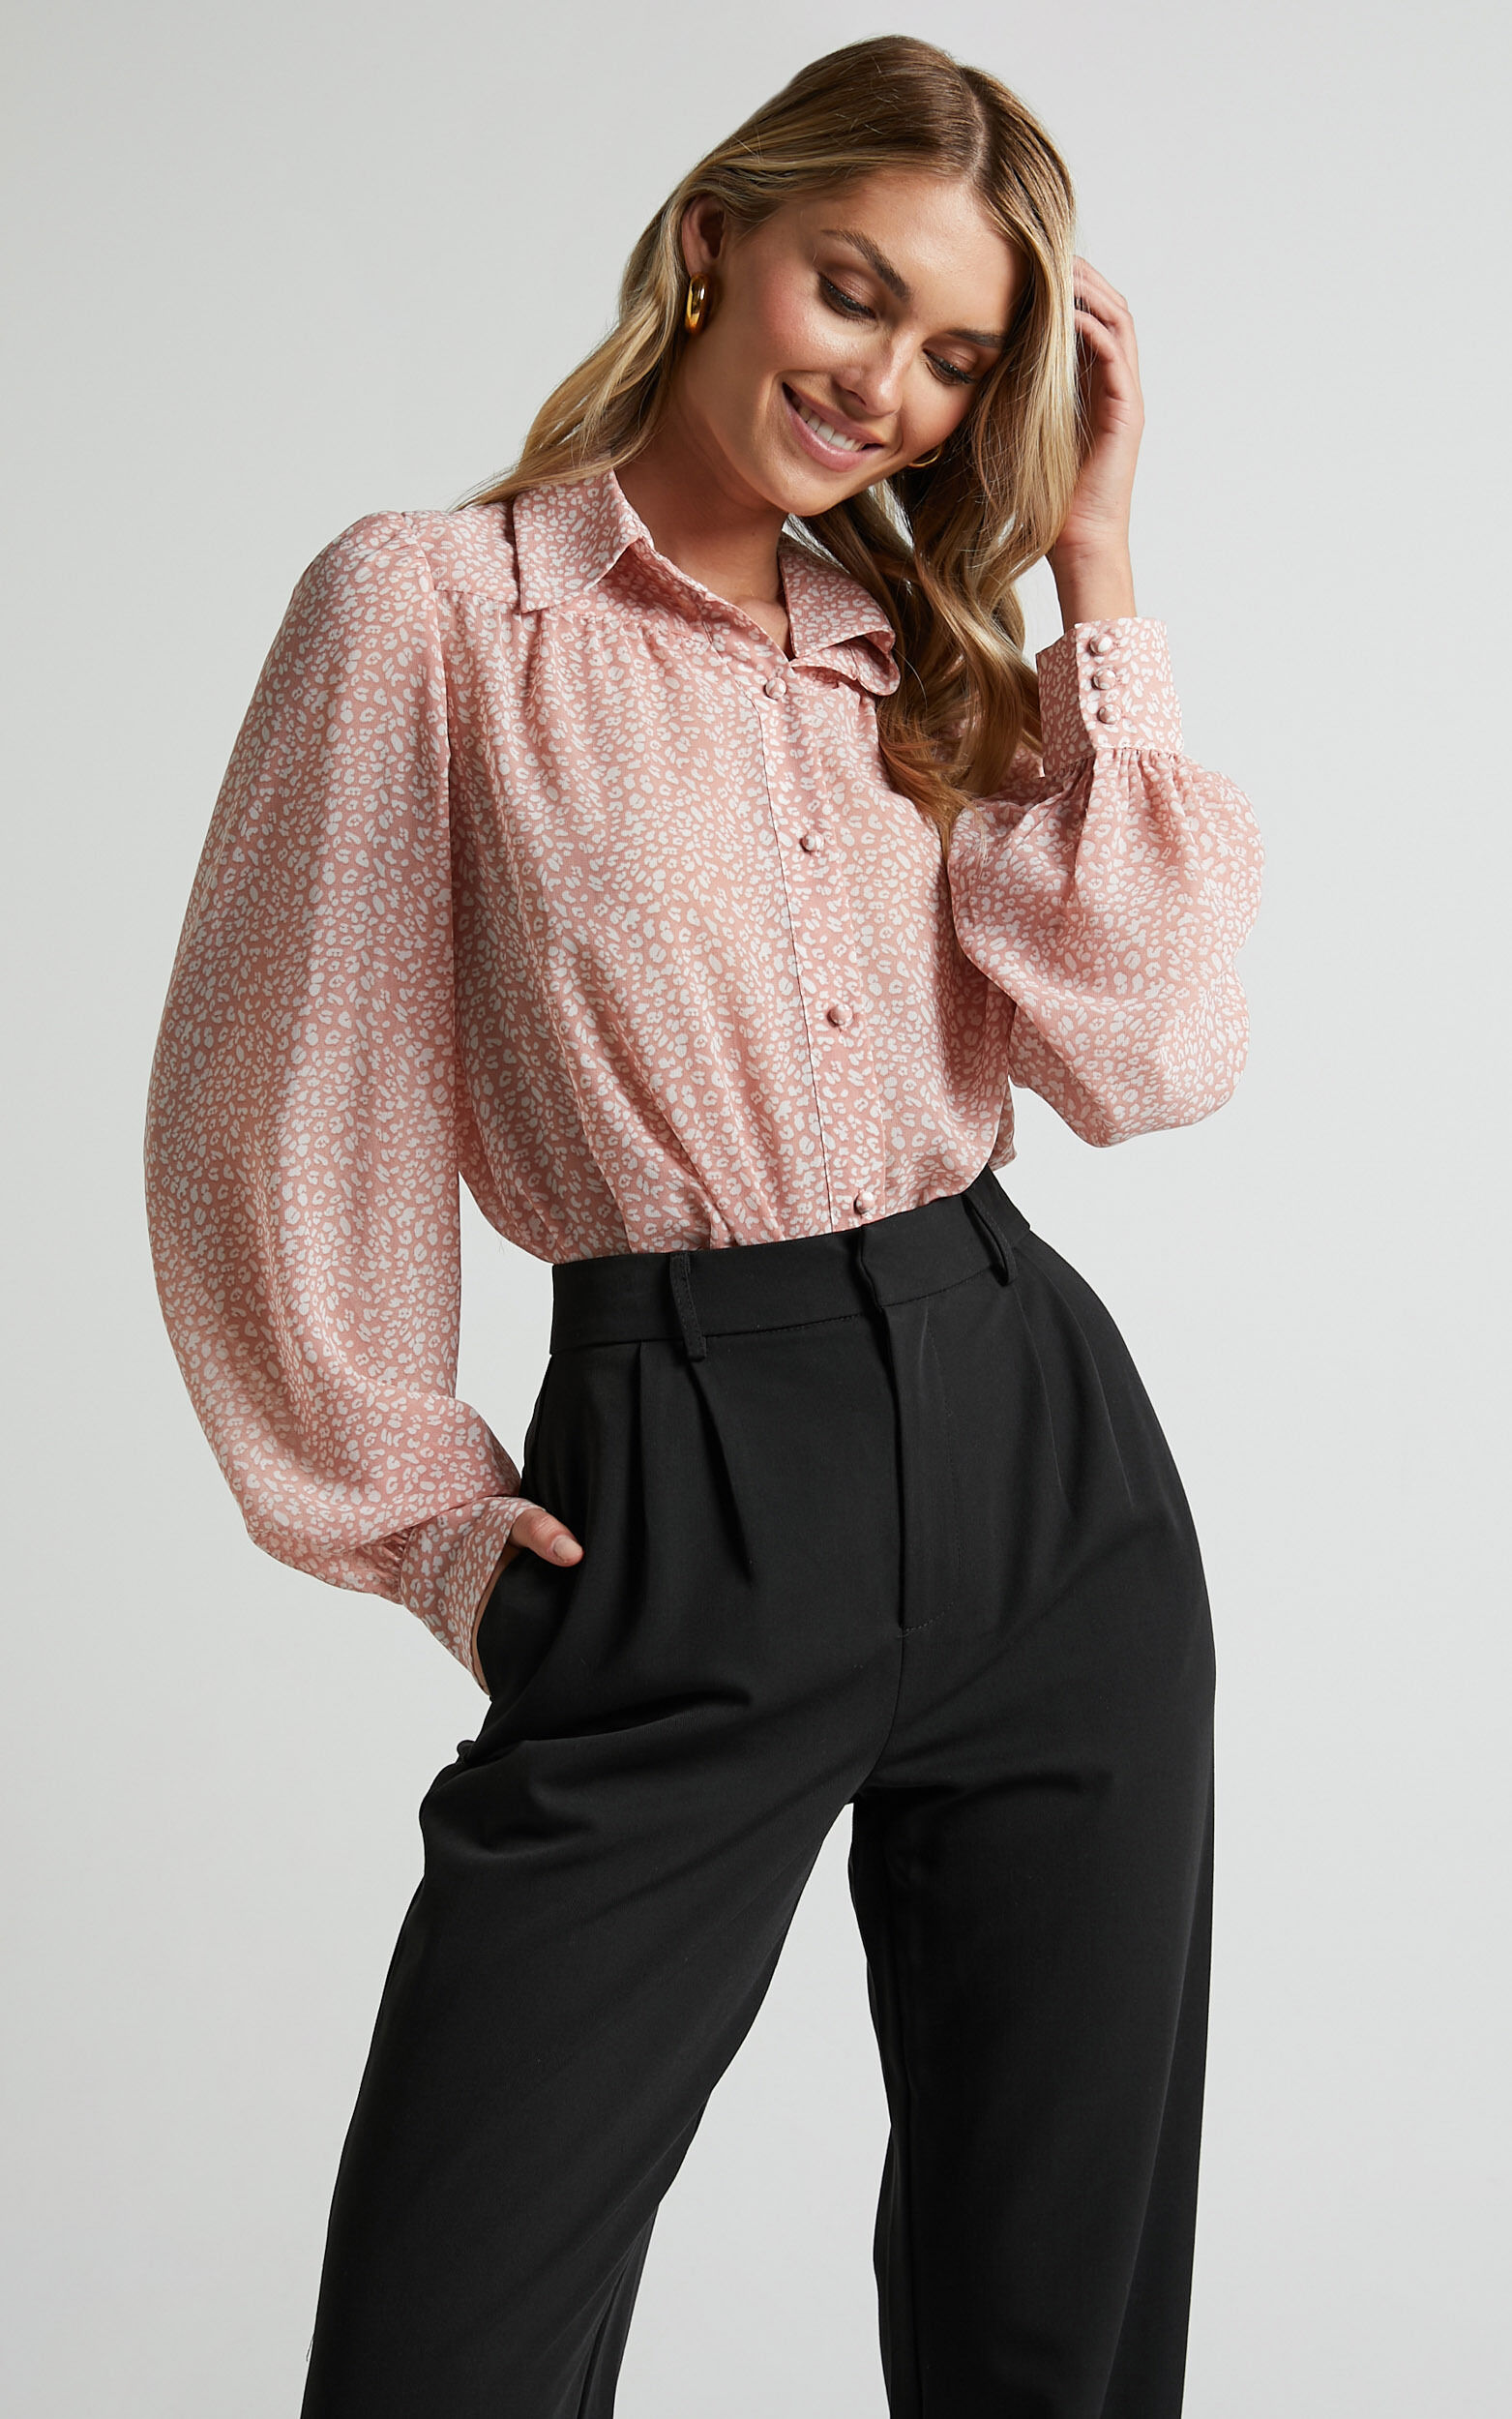 Milane Blouse - Collared Button through Long Blouson Sleeve in Pink & White Print - 04, PNK1